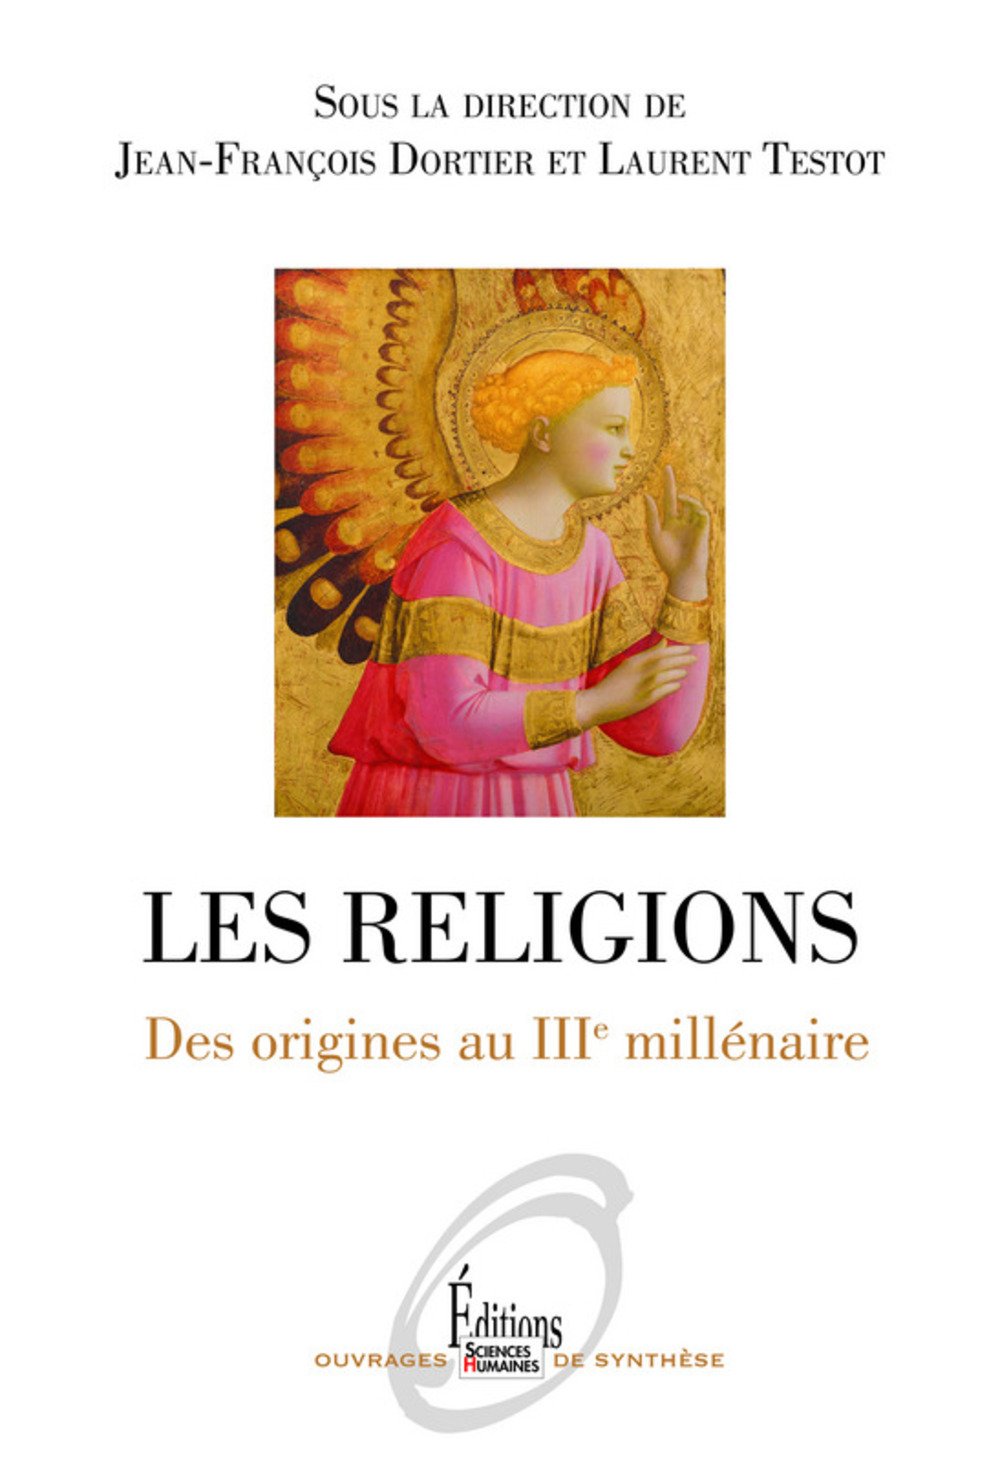 Les religions. Des origines au IIIe millénaire, 2017, 384 p.